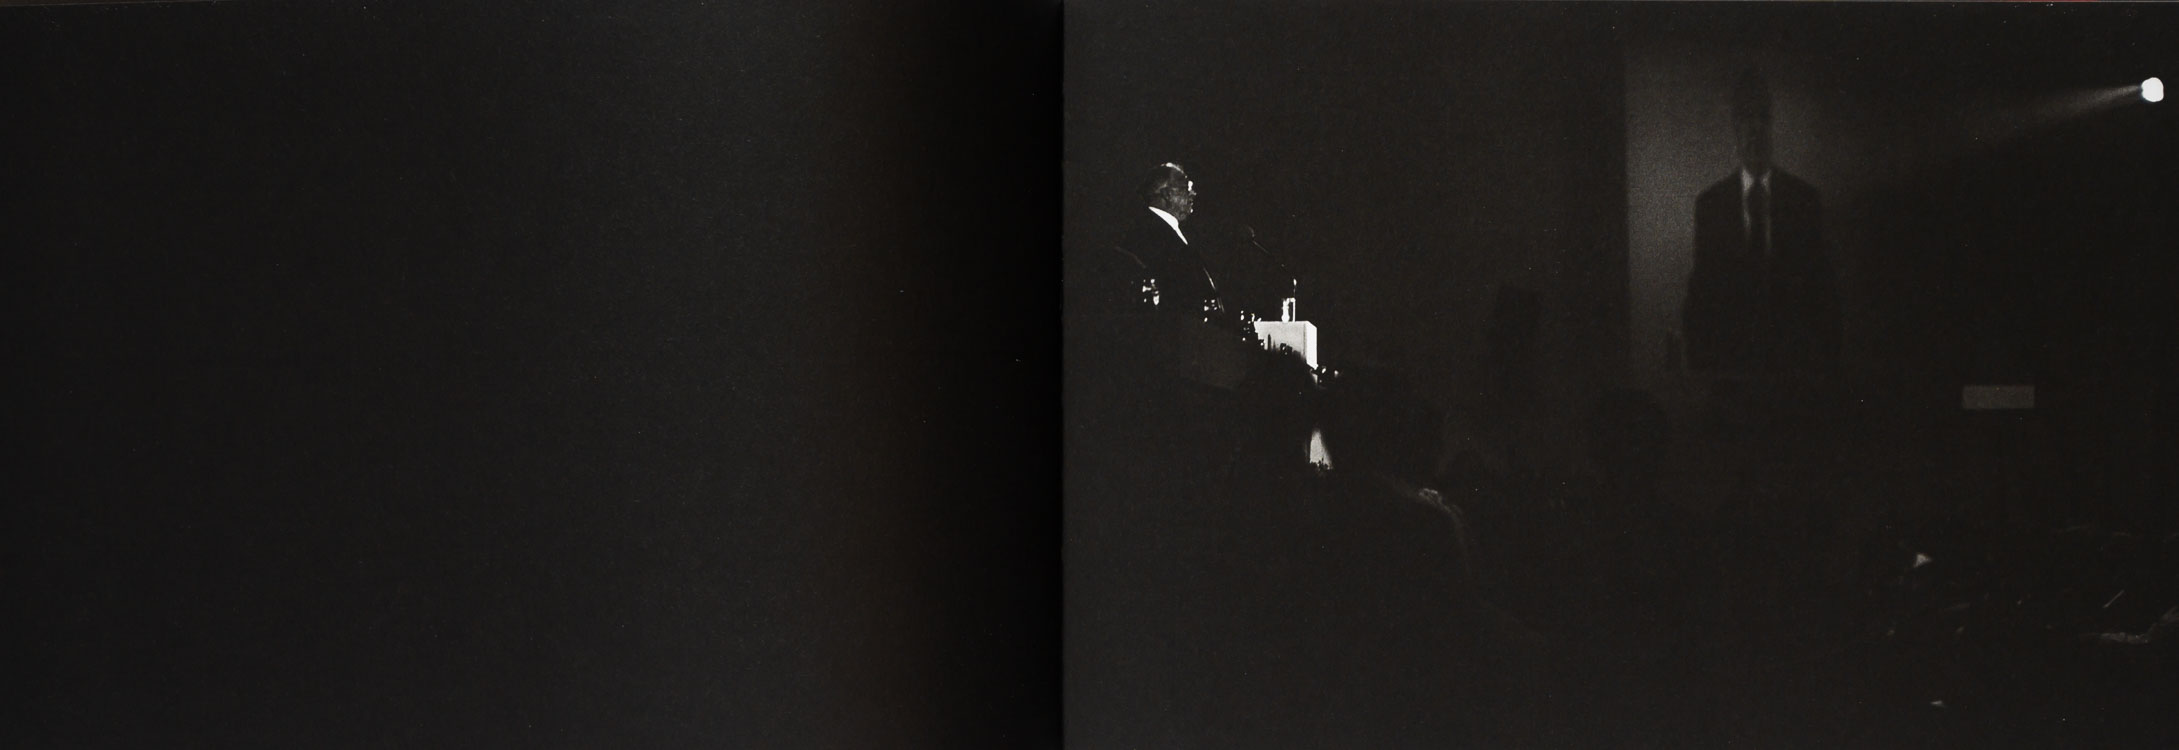 Inszenierung Helmut Kohl 1990, Fotobuch WAHL KAMPF RITUAL - Fotografie